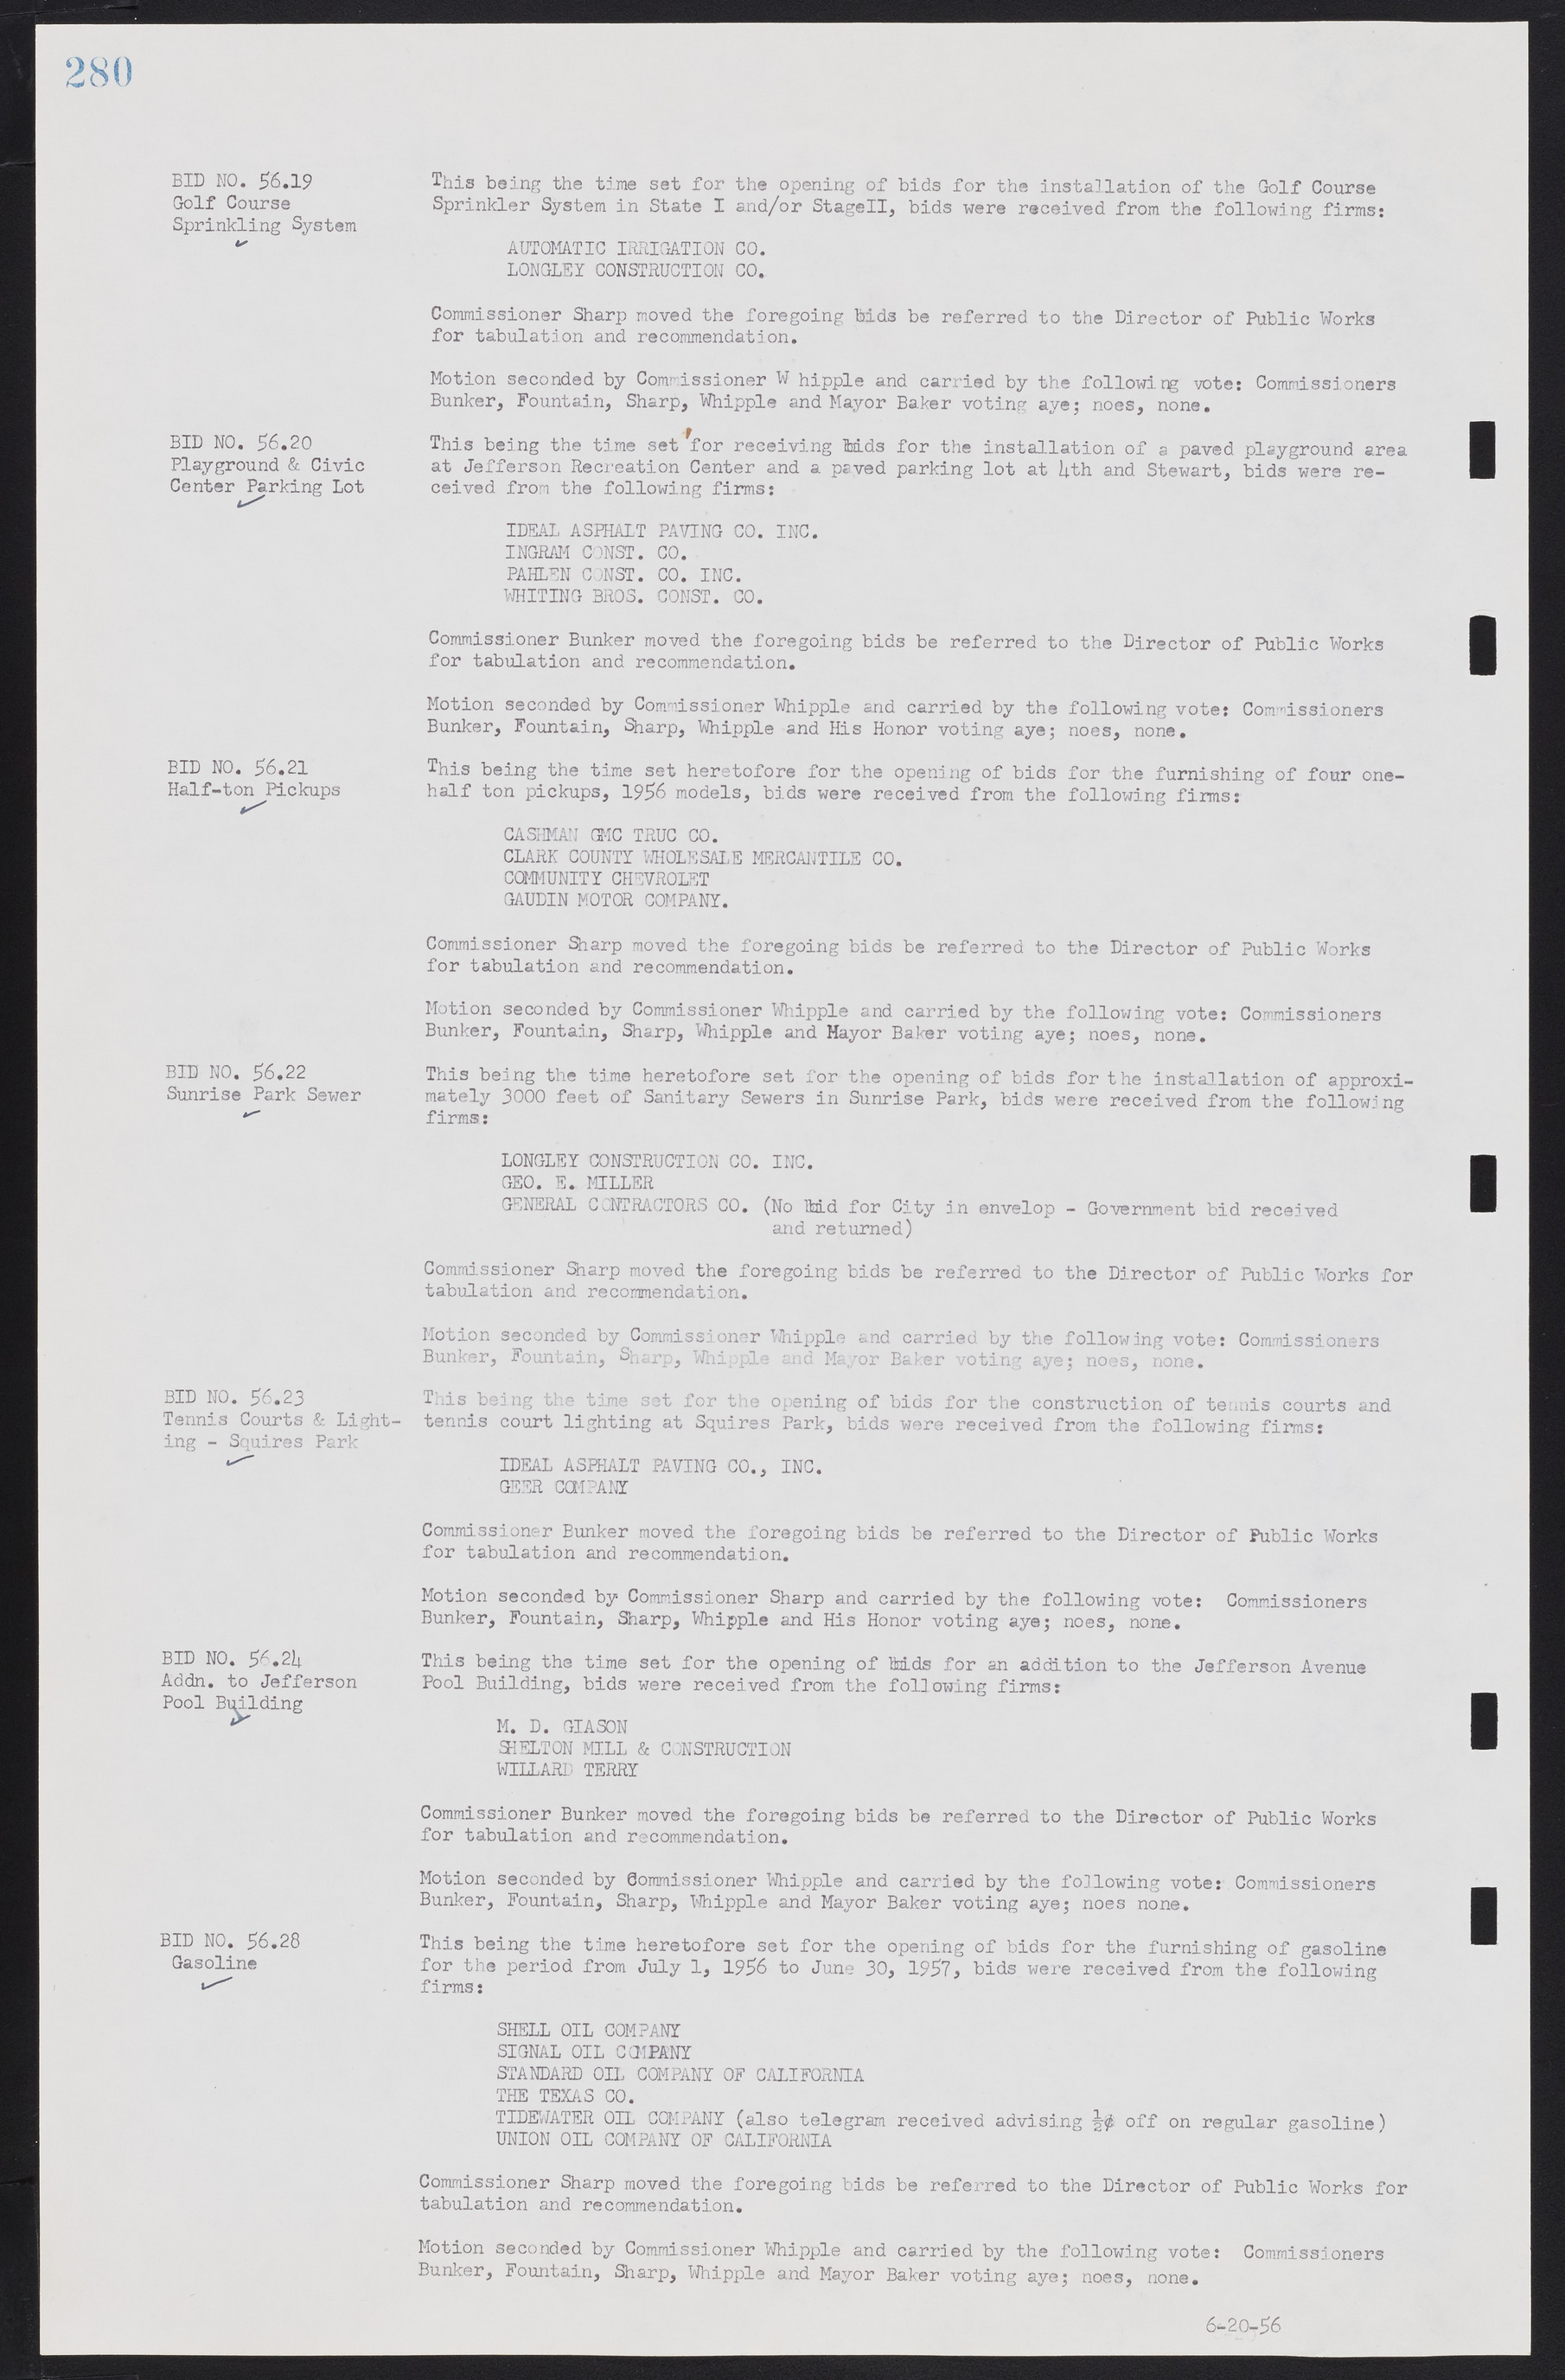 Las Vegas City Commission Minutes, September 21, 1955 to November 20, 1957, lvc000010-300